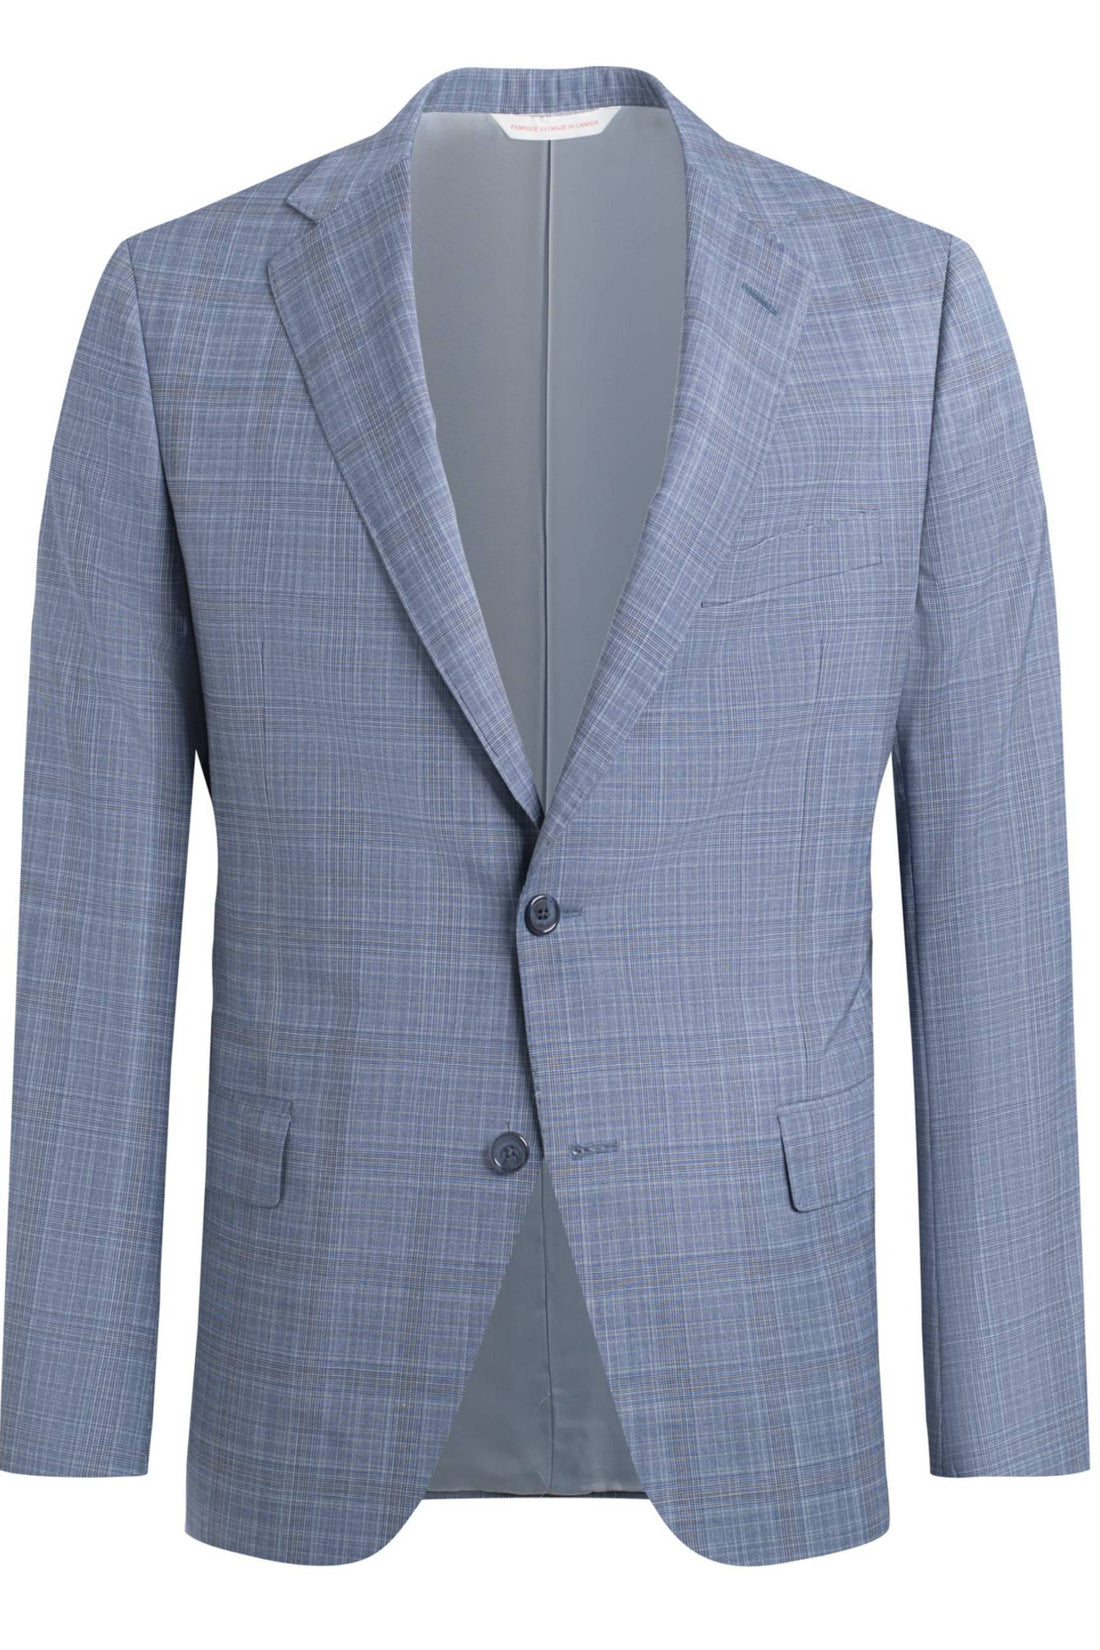 Samuelsohn Slate Blue Plaid Soft Suit Front Jacket